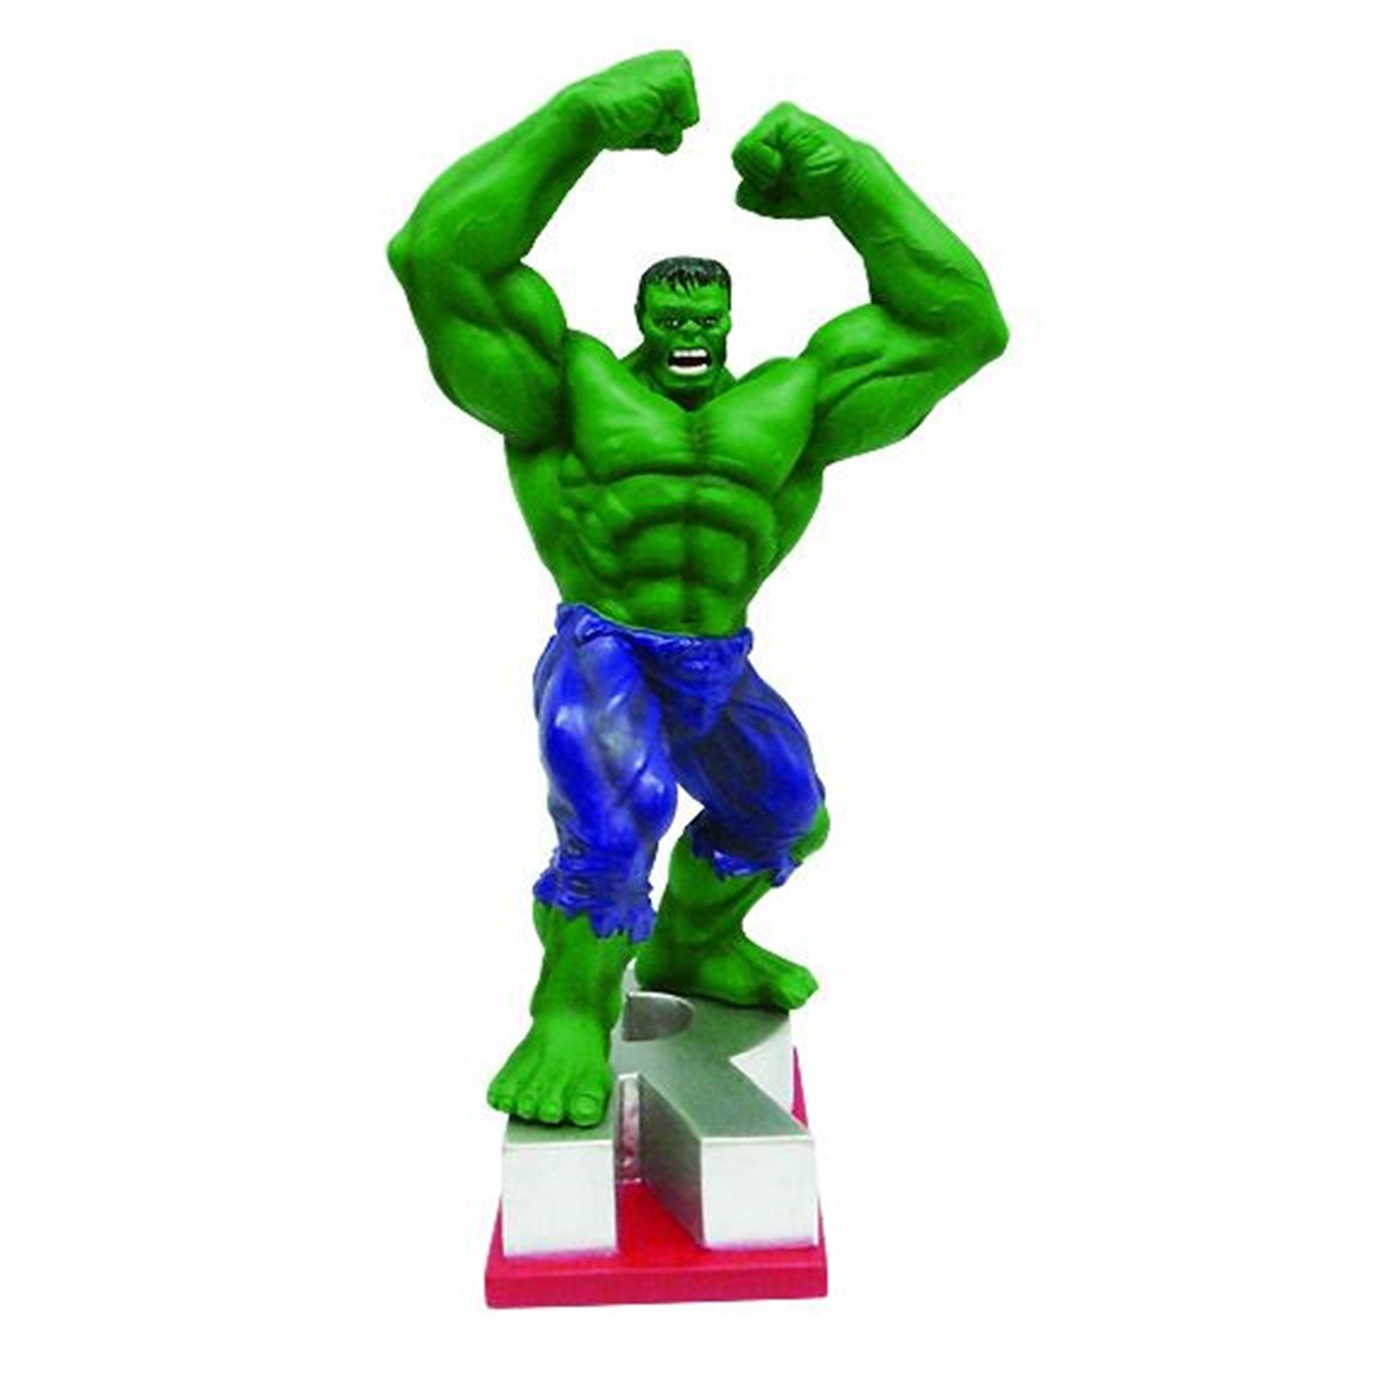 Hulk Marvel "R" Collectible Figurine